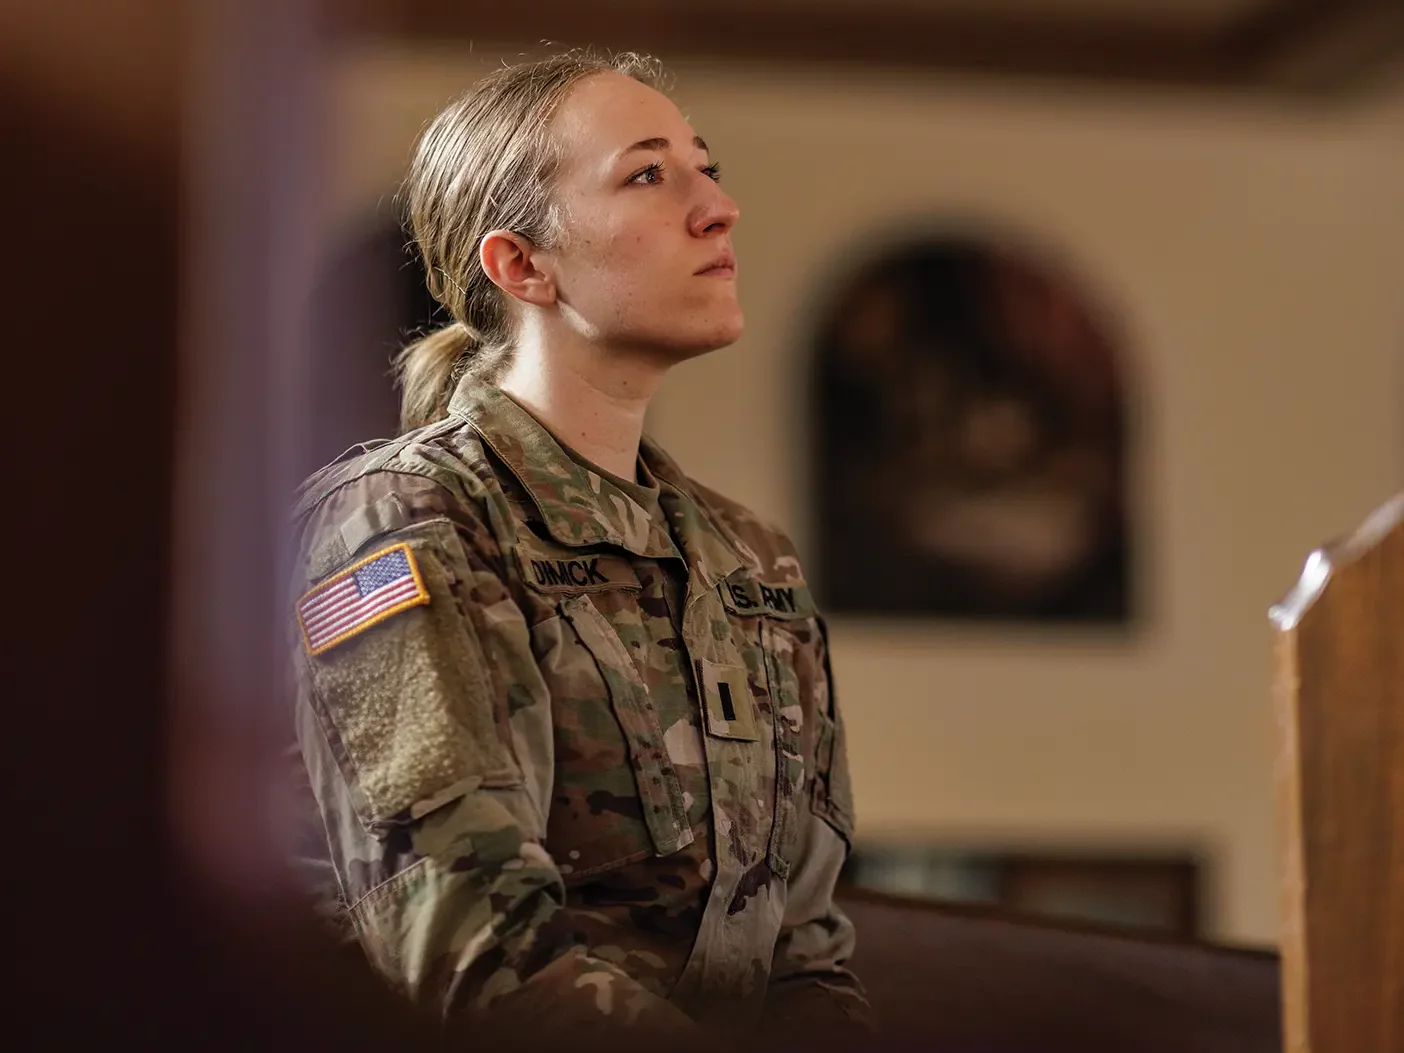 A female military chaplain ponders while in a church.